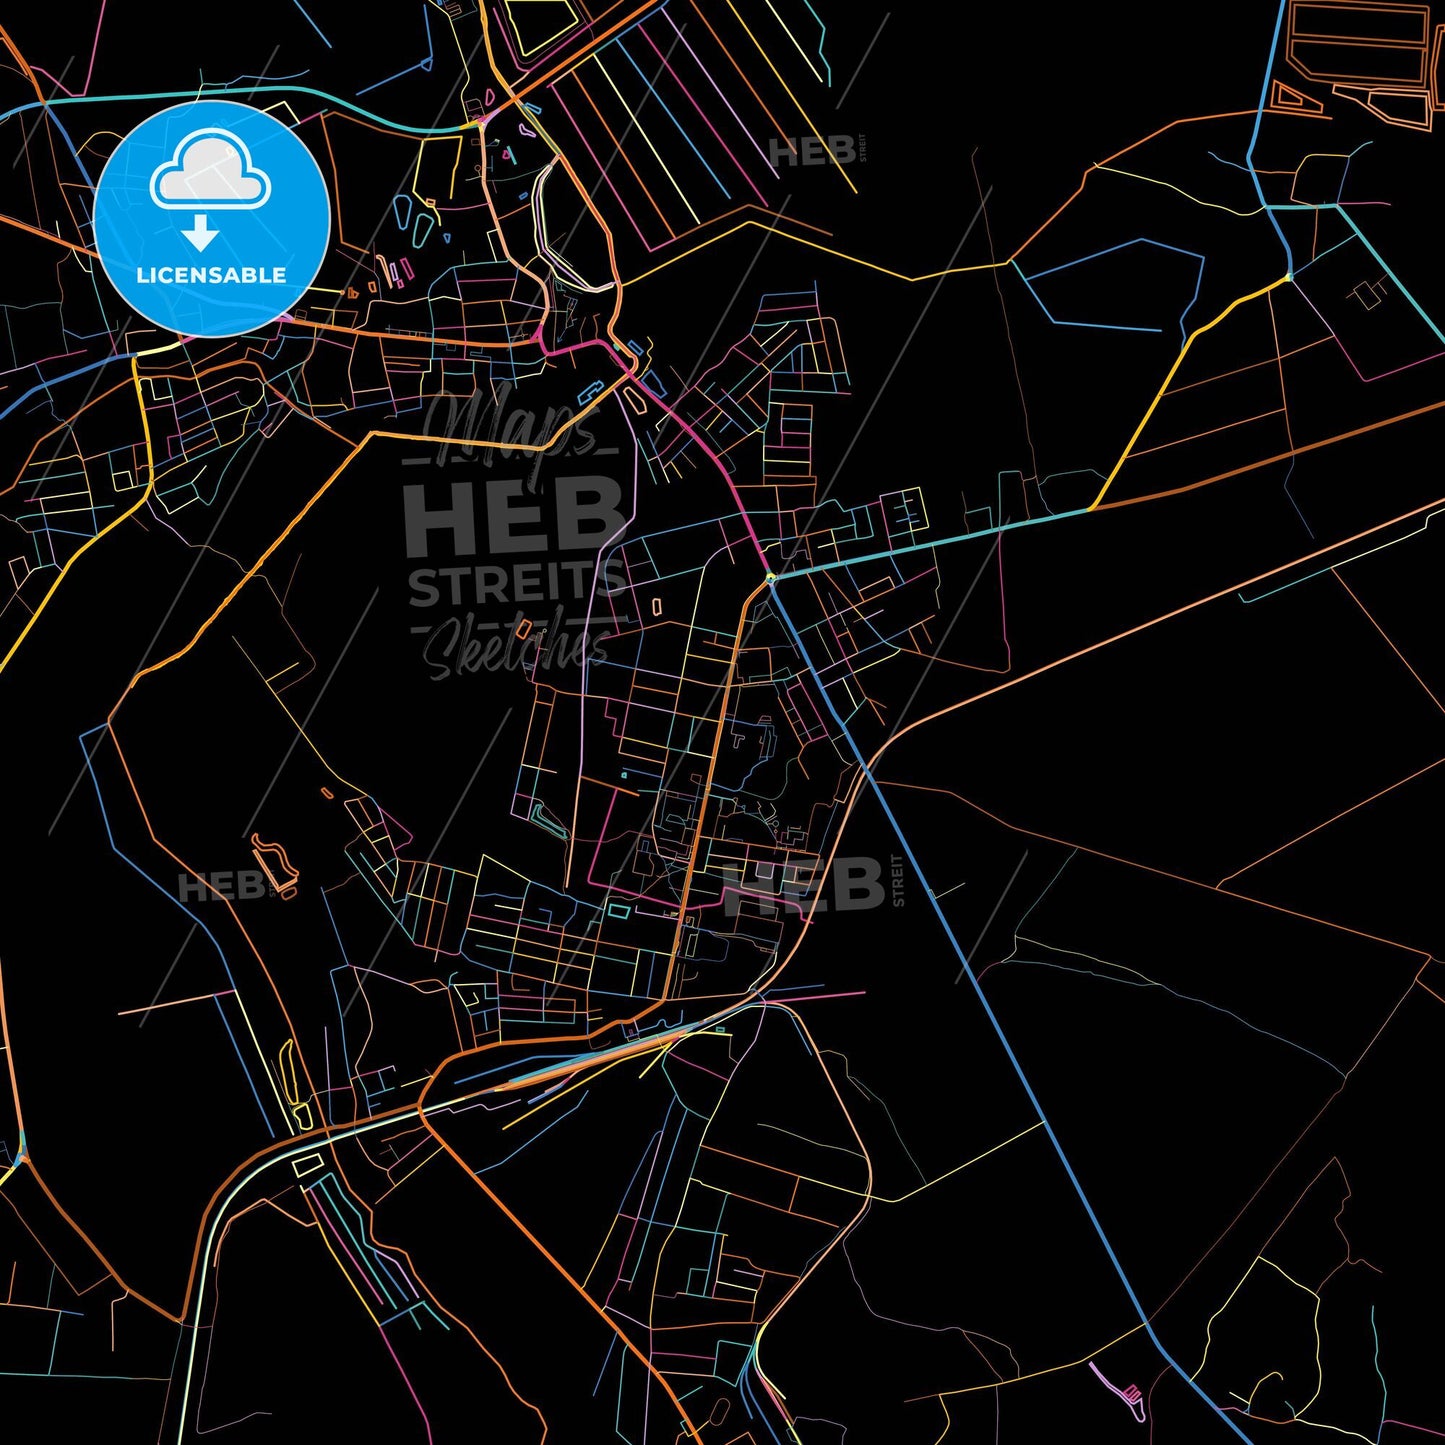 Dubno, Rivne Oblast, Ukraine, colorful city map on black background